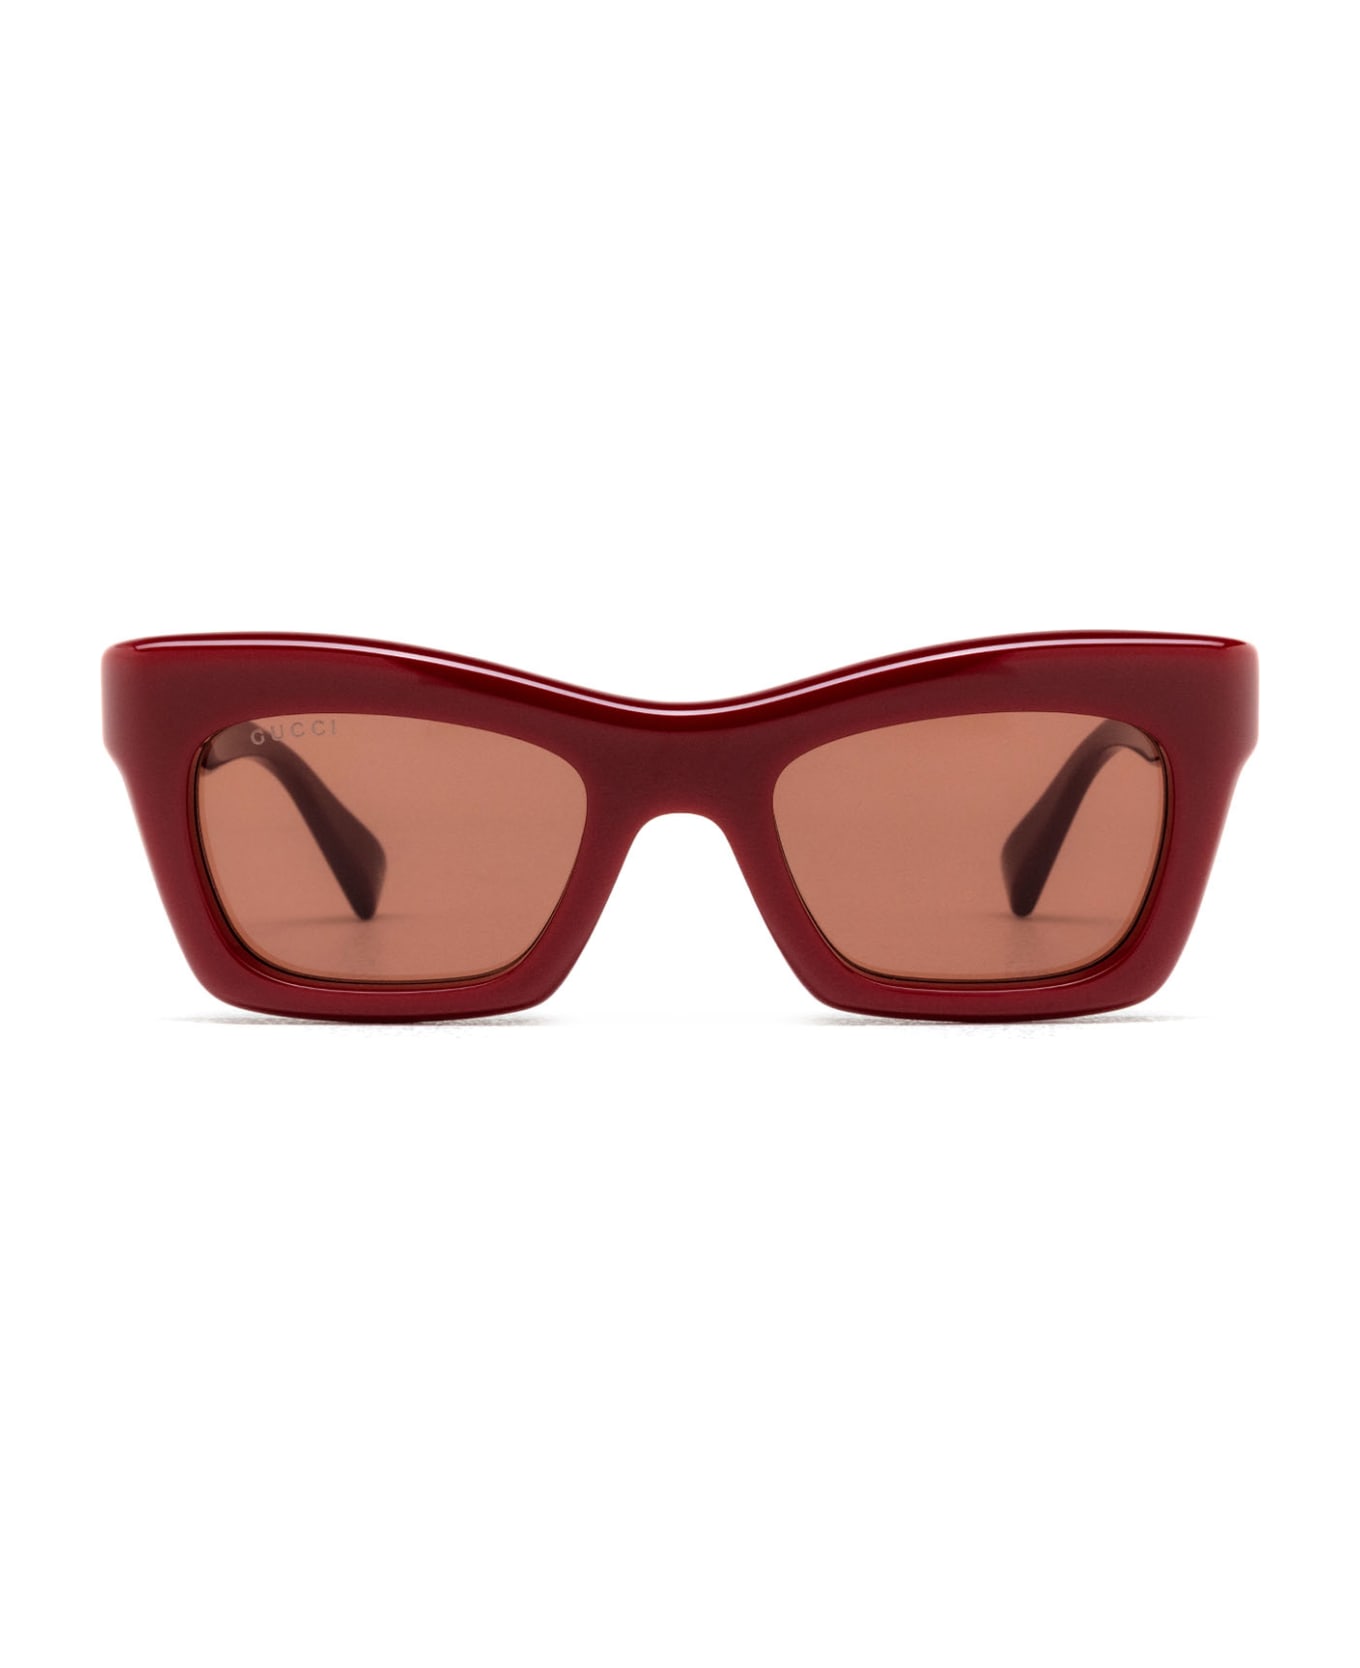 Gucci Eyewear Gg1773s Burgundy Sunglasses - Burgundy